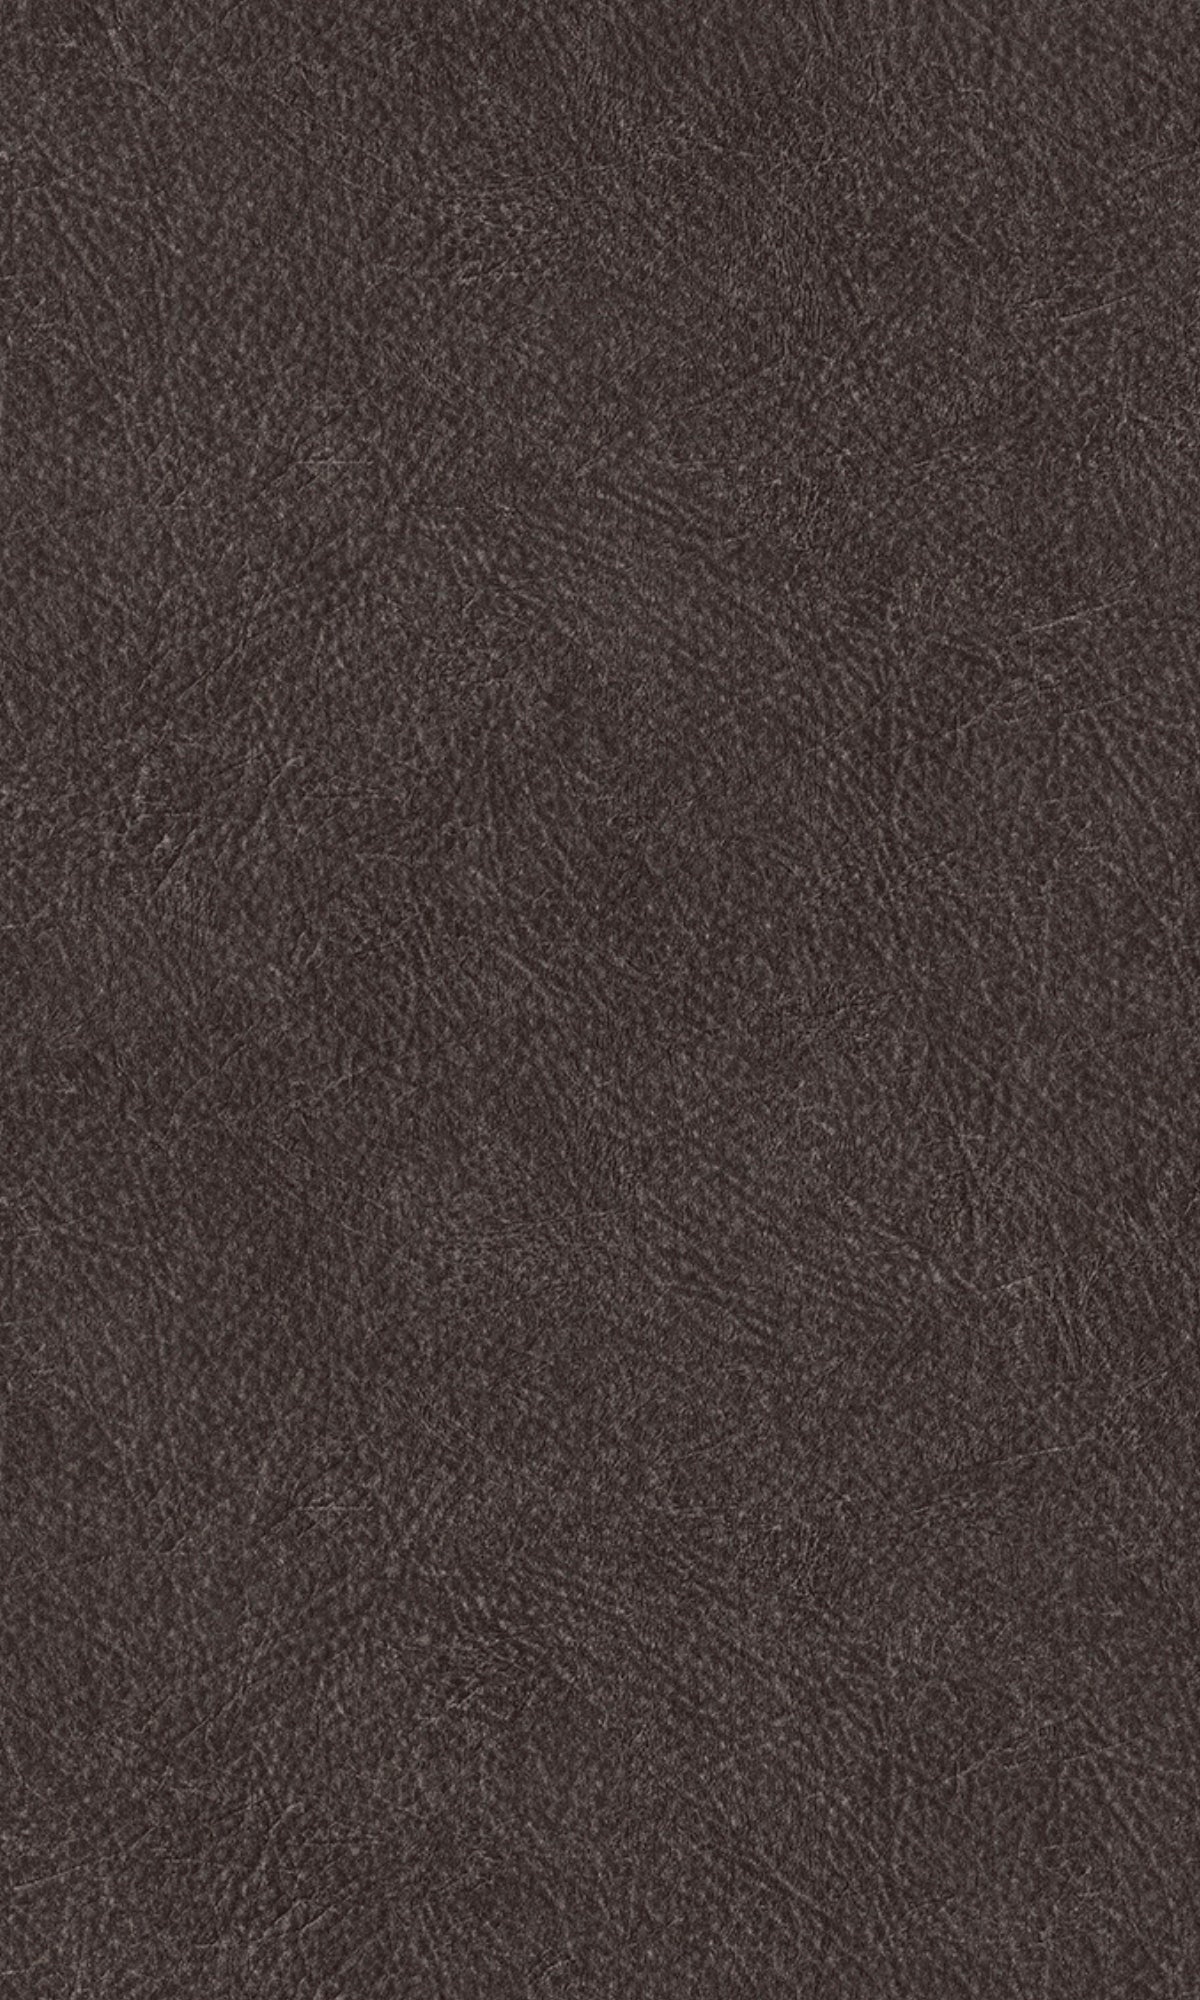 Black Plain Leather Textured Wallpaper R8220